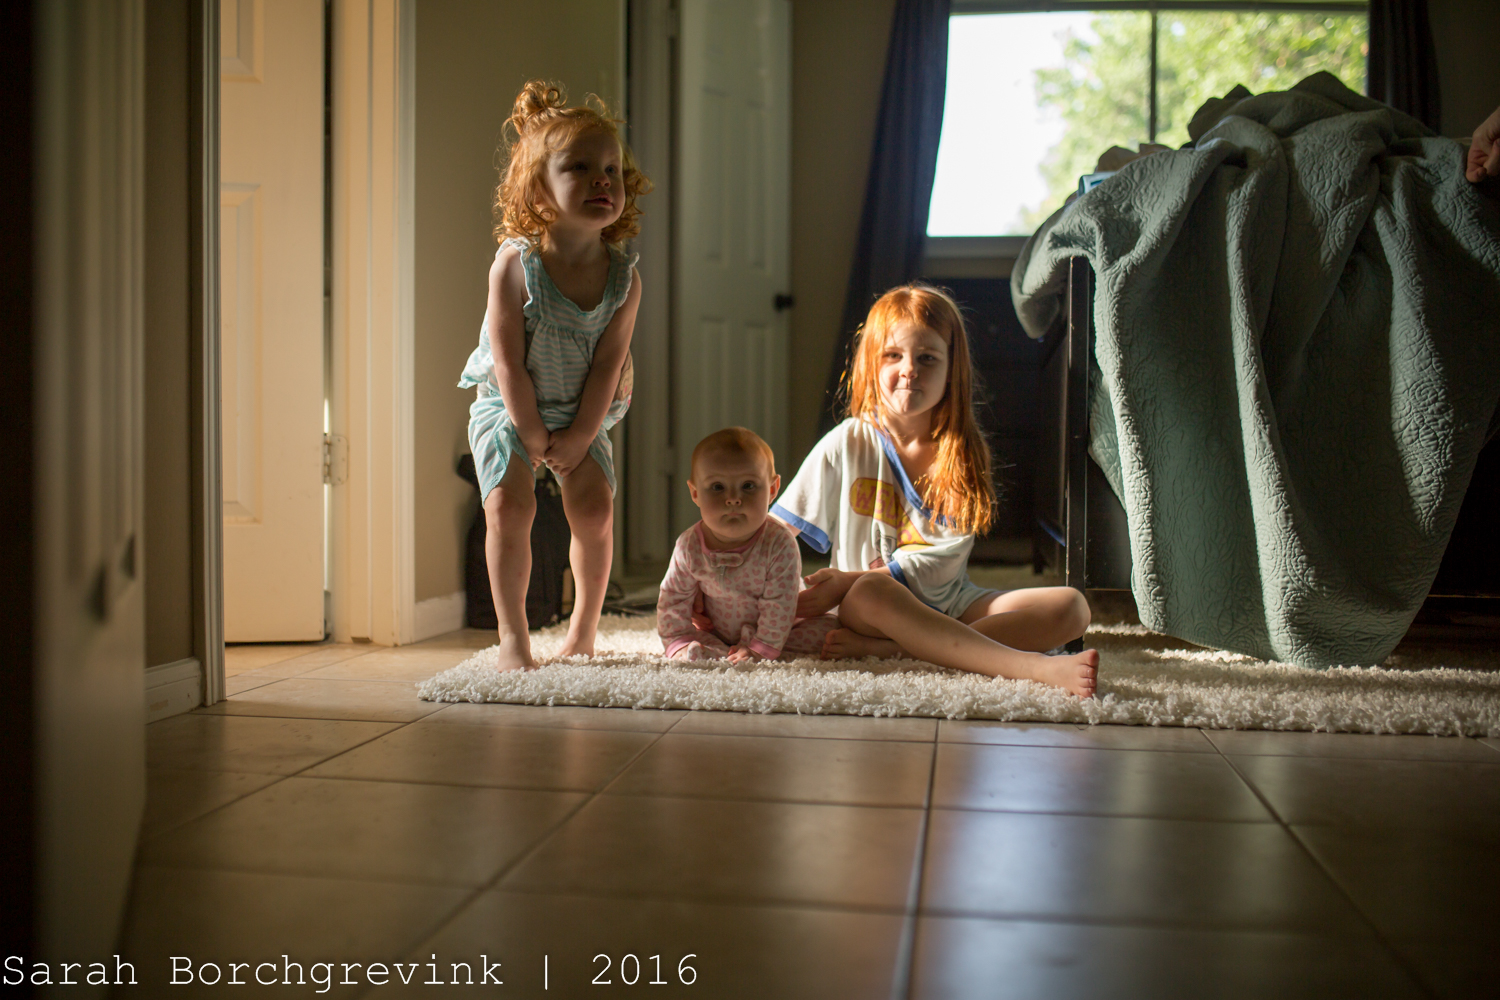 Houston Child and Family Photographer - Lifestyle Photography (2 of 3).JPG